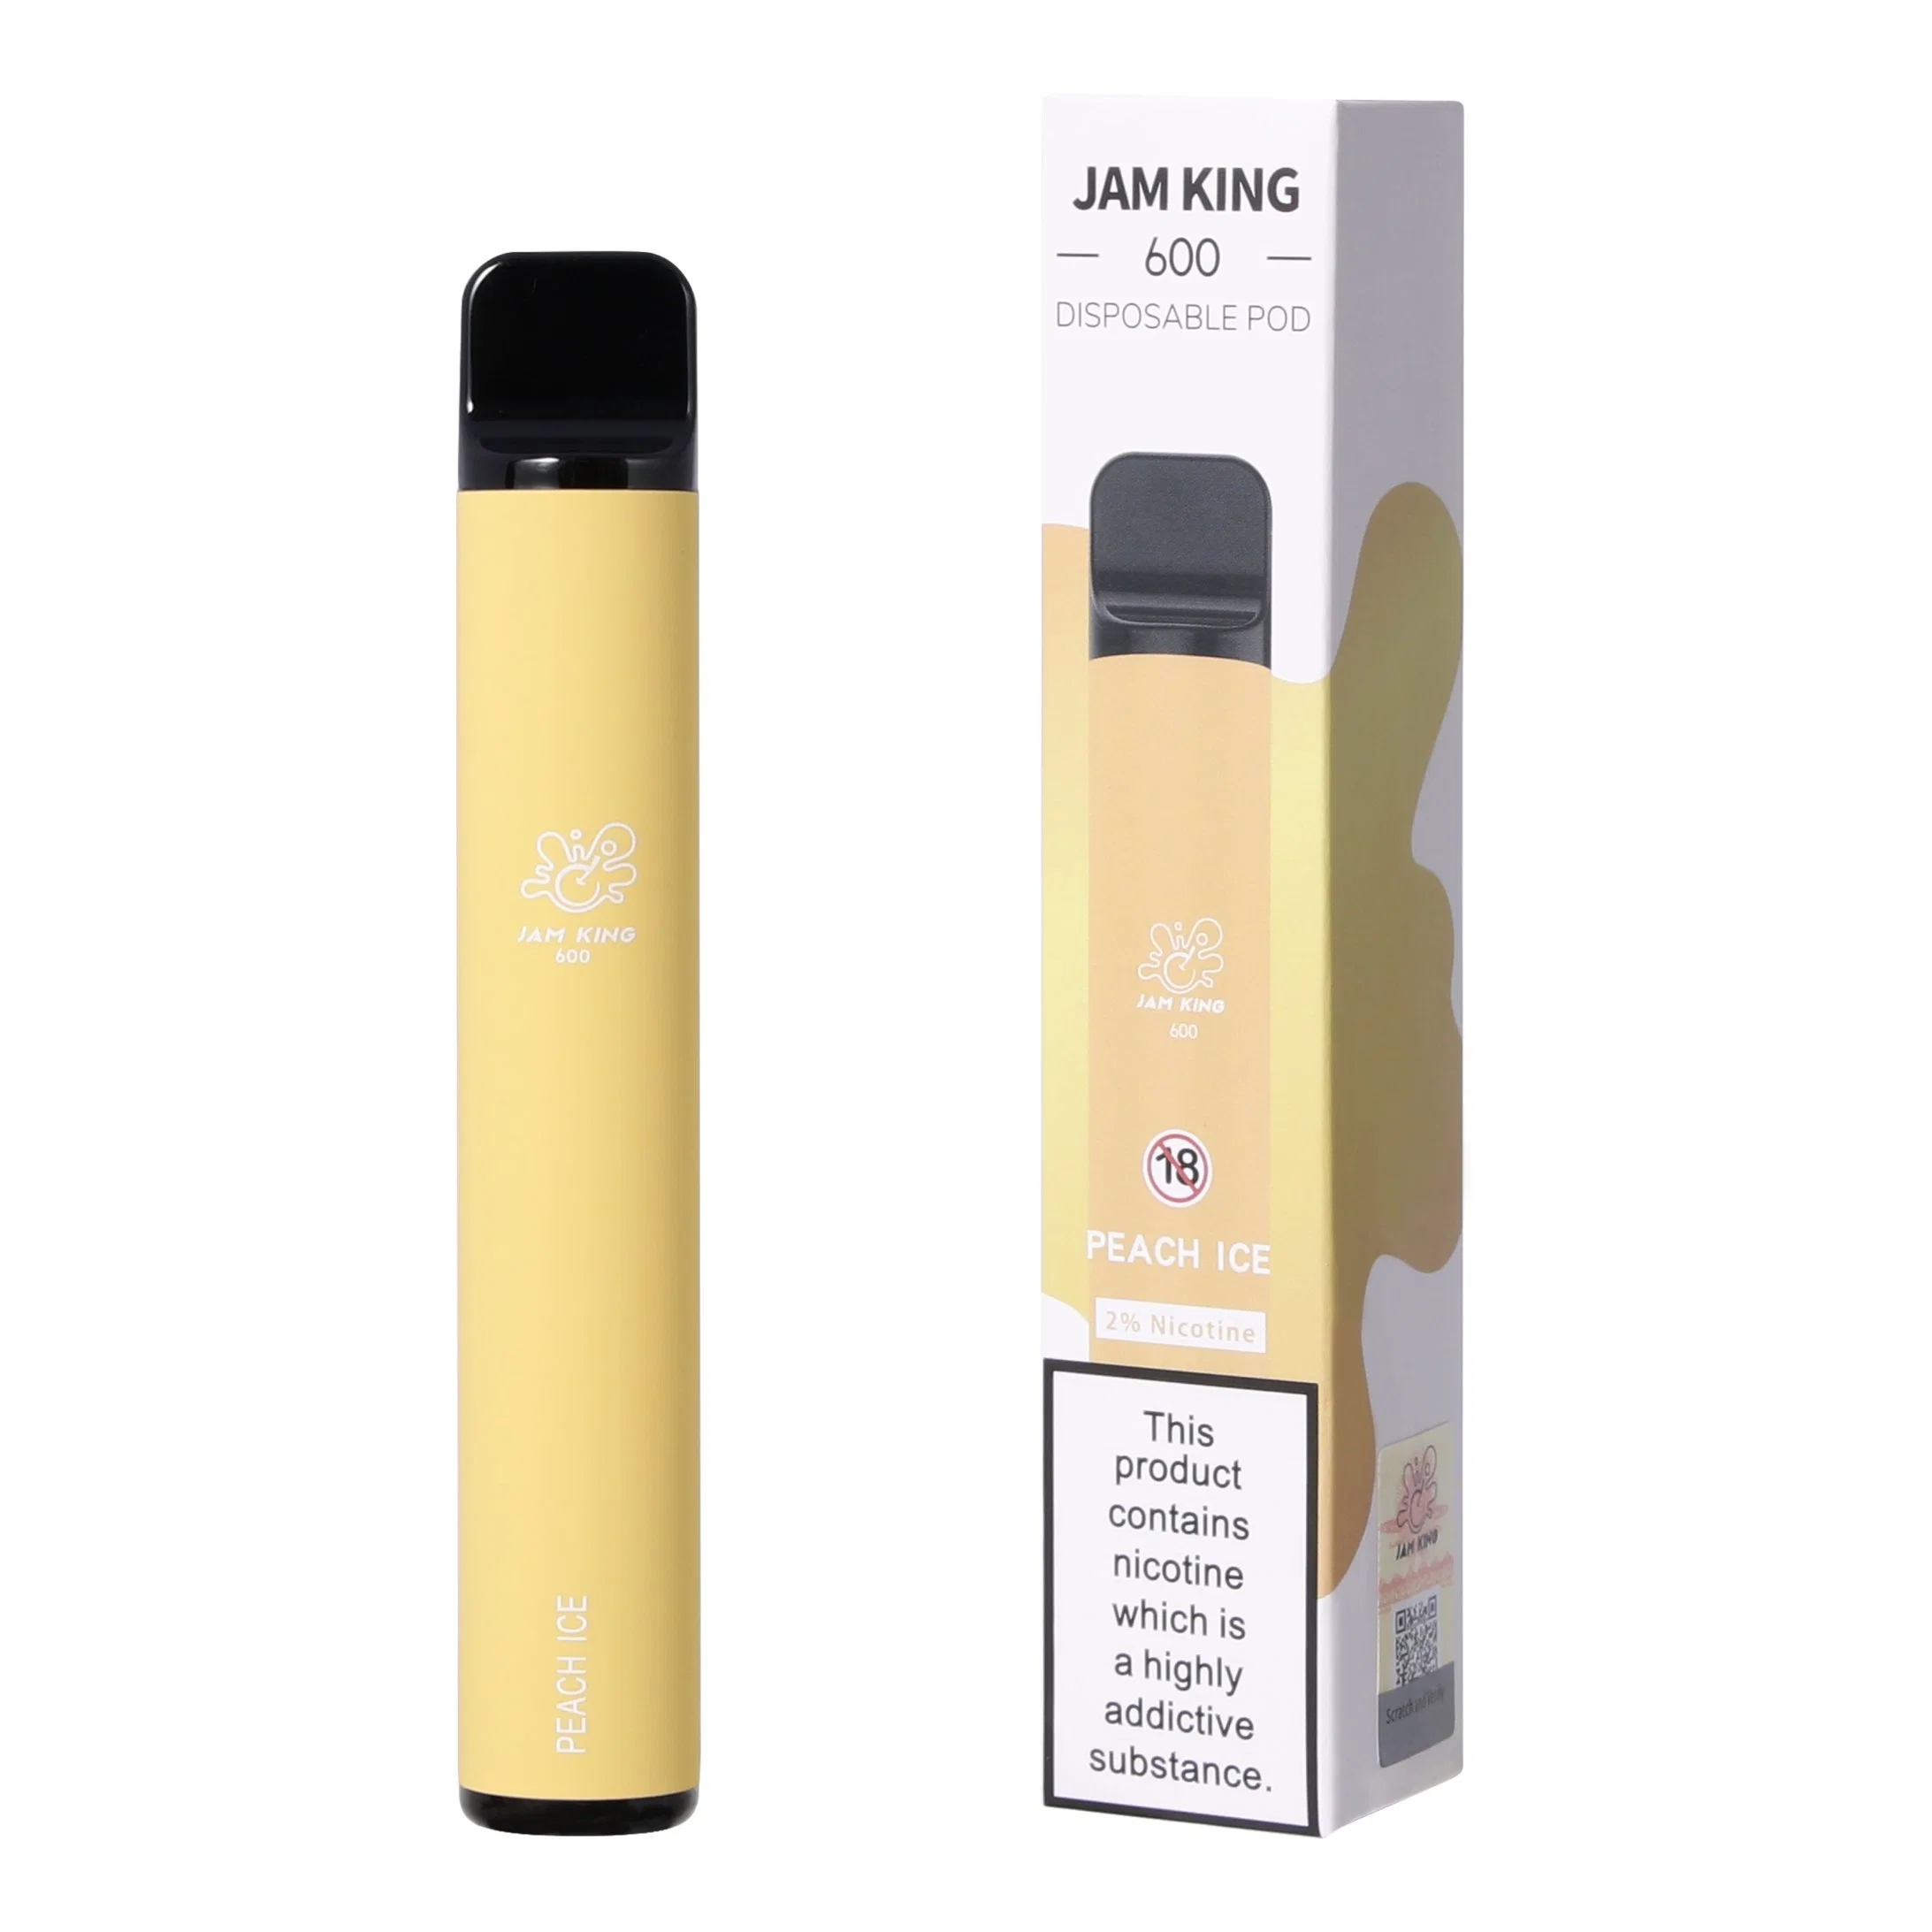 Jam King 600 Vape Puff Disposable/Chargeable E Cigarette 2ml 550mAh Battery Factory China Flavored Vapes Pen Bulk